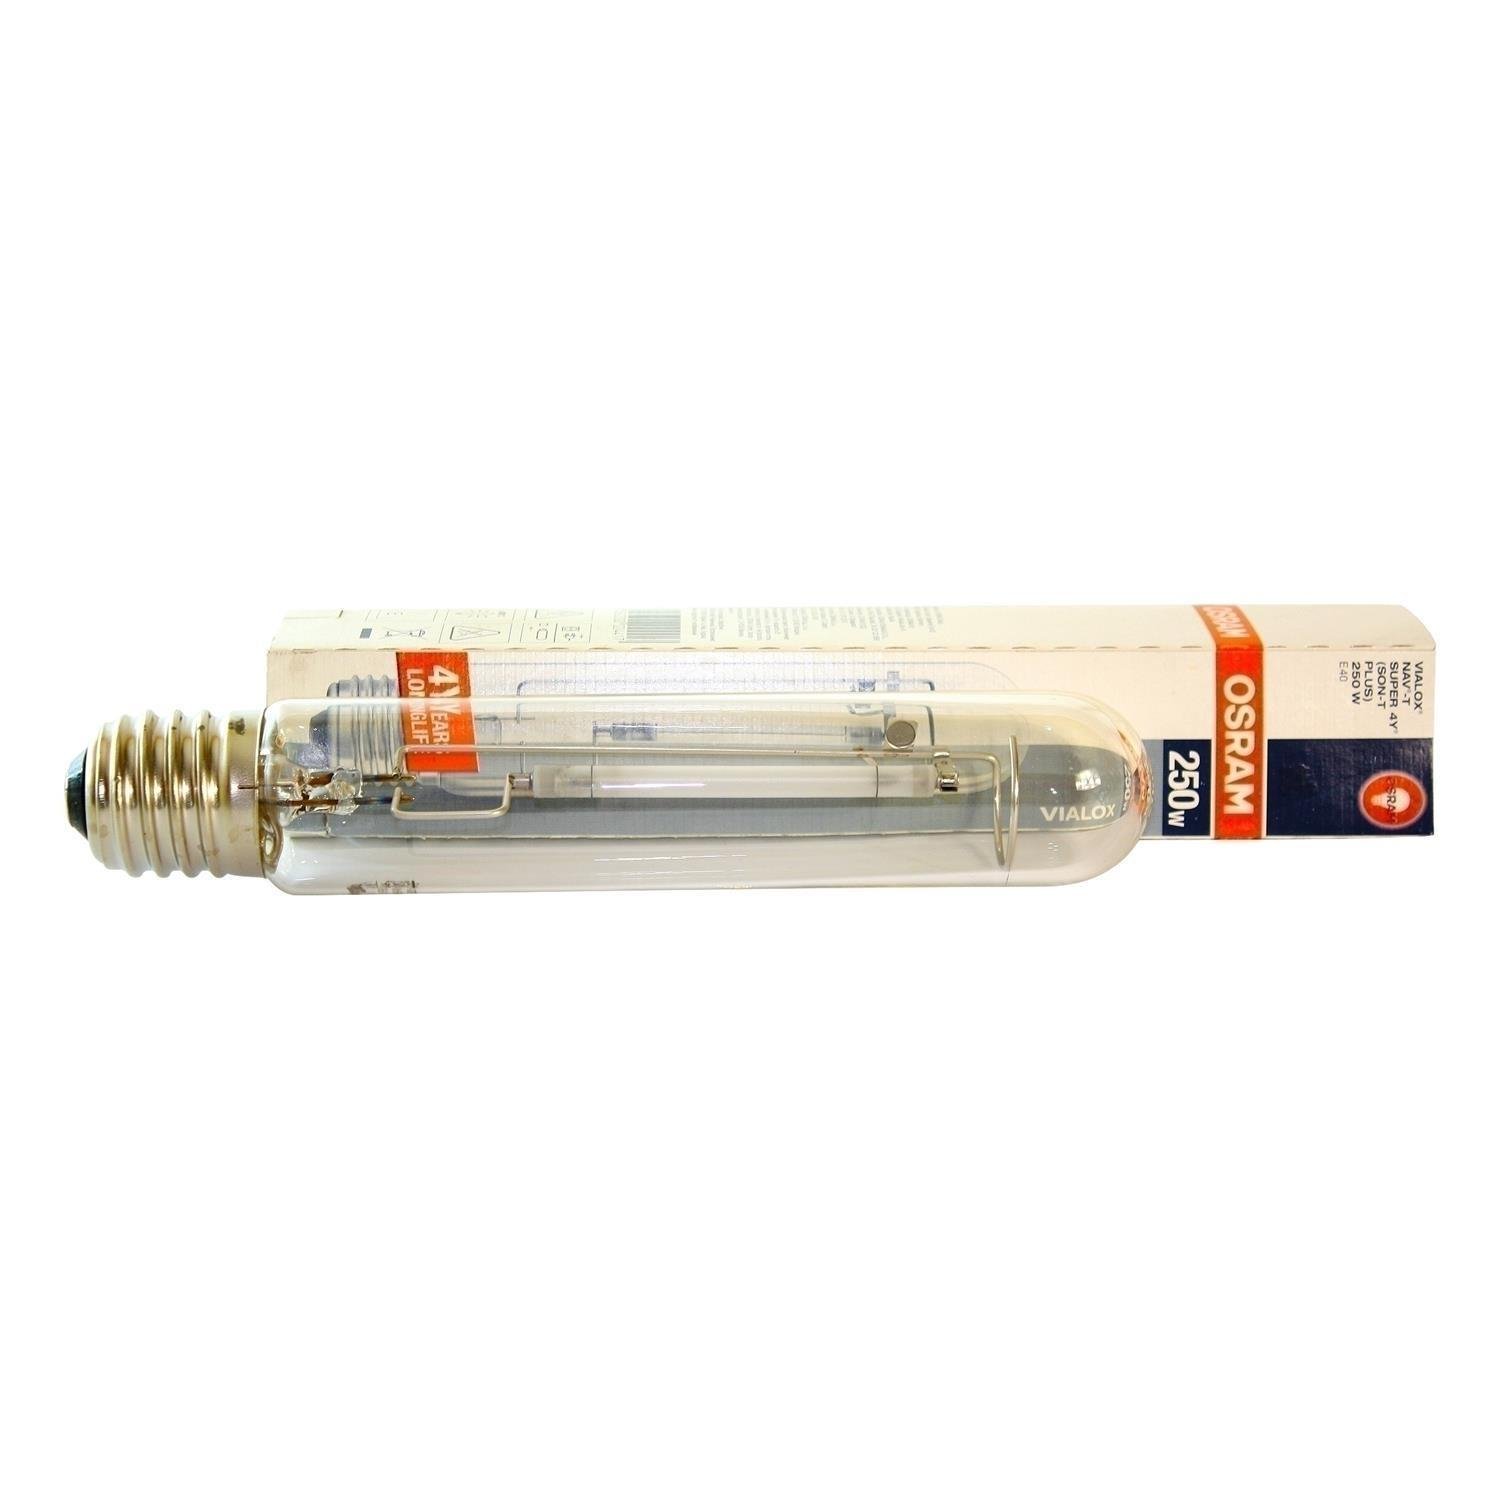 Osram Vialox NAV-T Leuchtmittel 250W unter Beleuchtung > Natriumdampflampen > Leuchtmittel